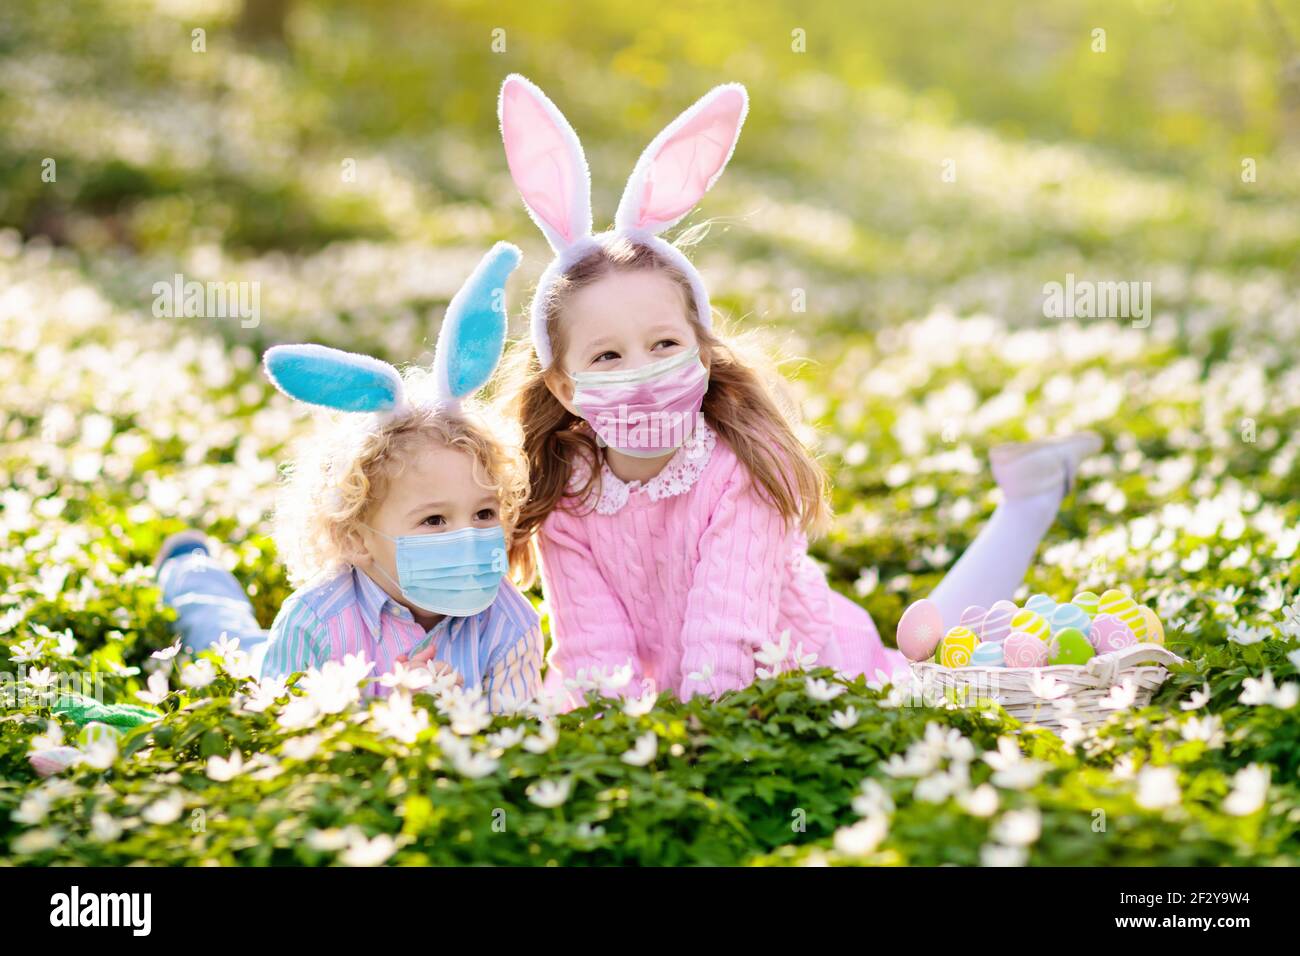 spring hidden pictures for kids